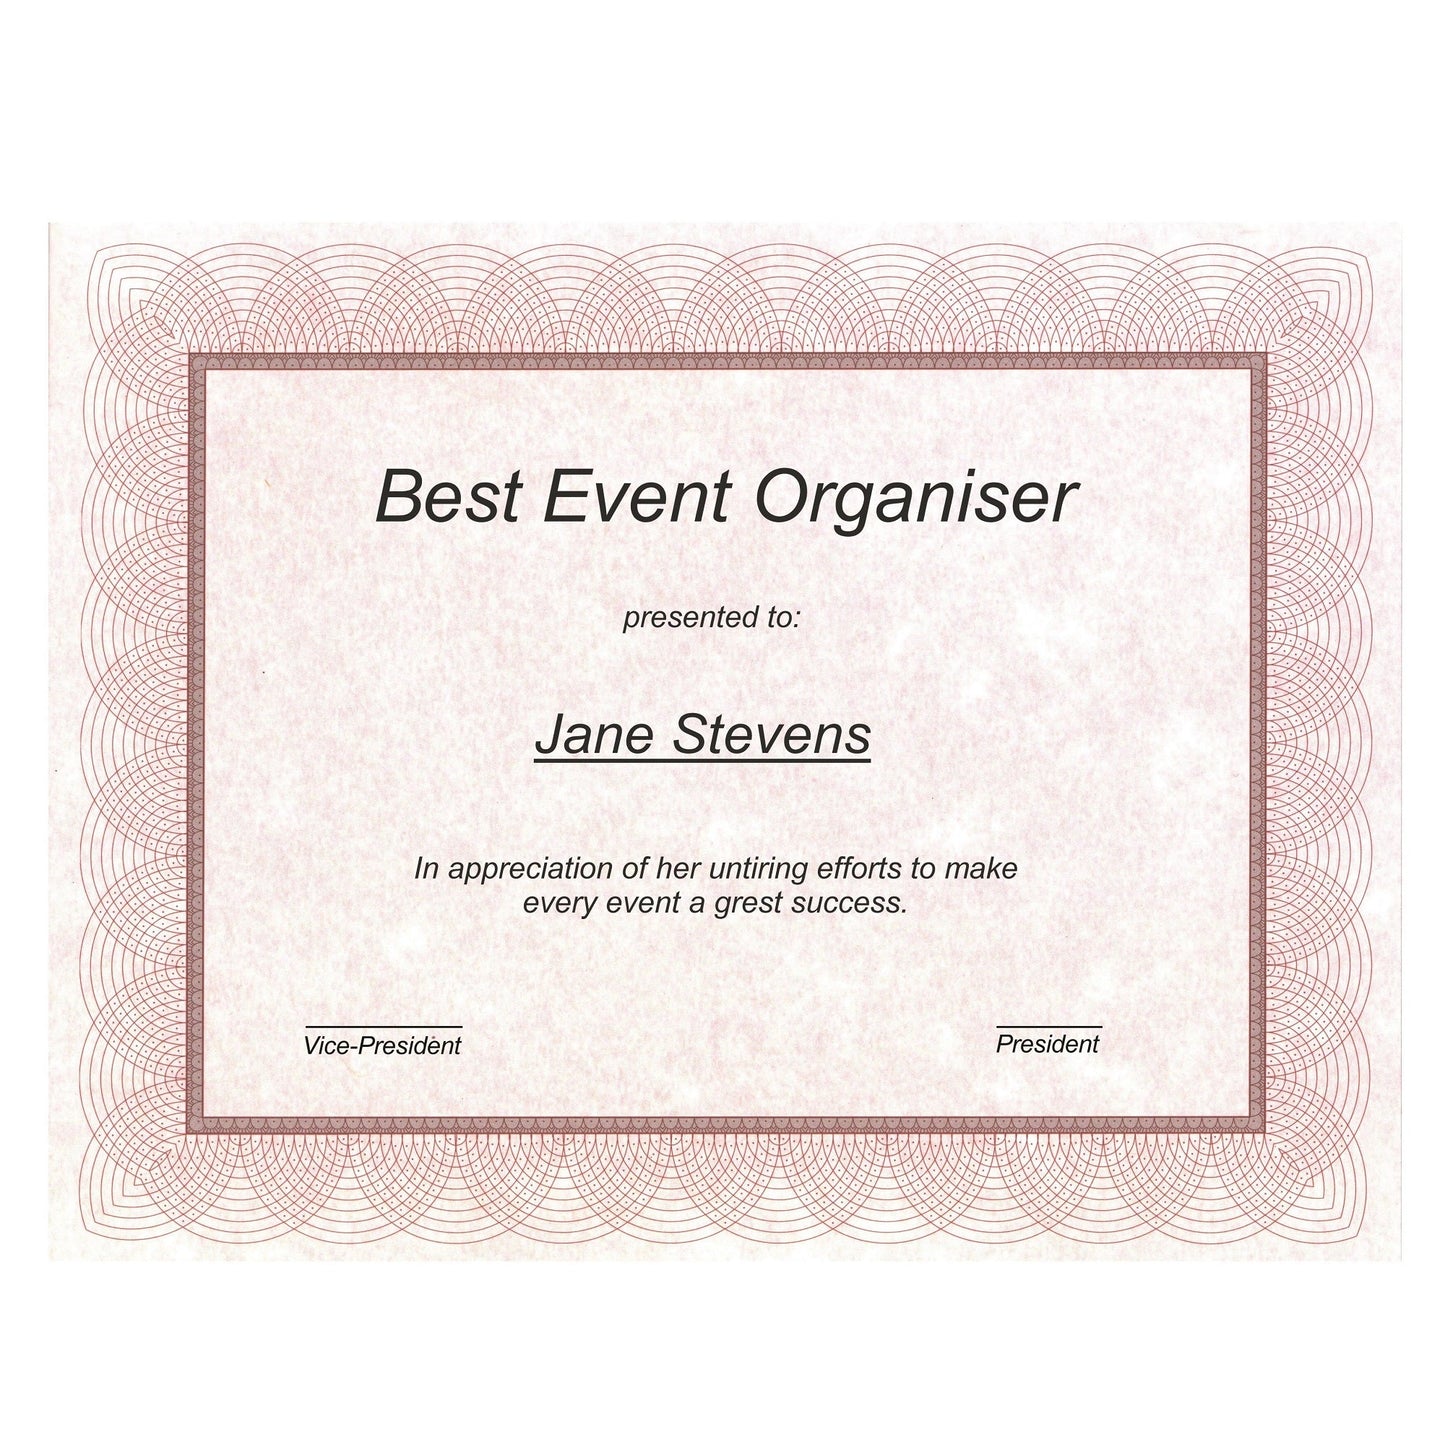 St. James® Certificates, 24 lb Paper, Regent Red, Pack of 100